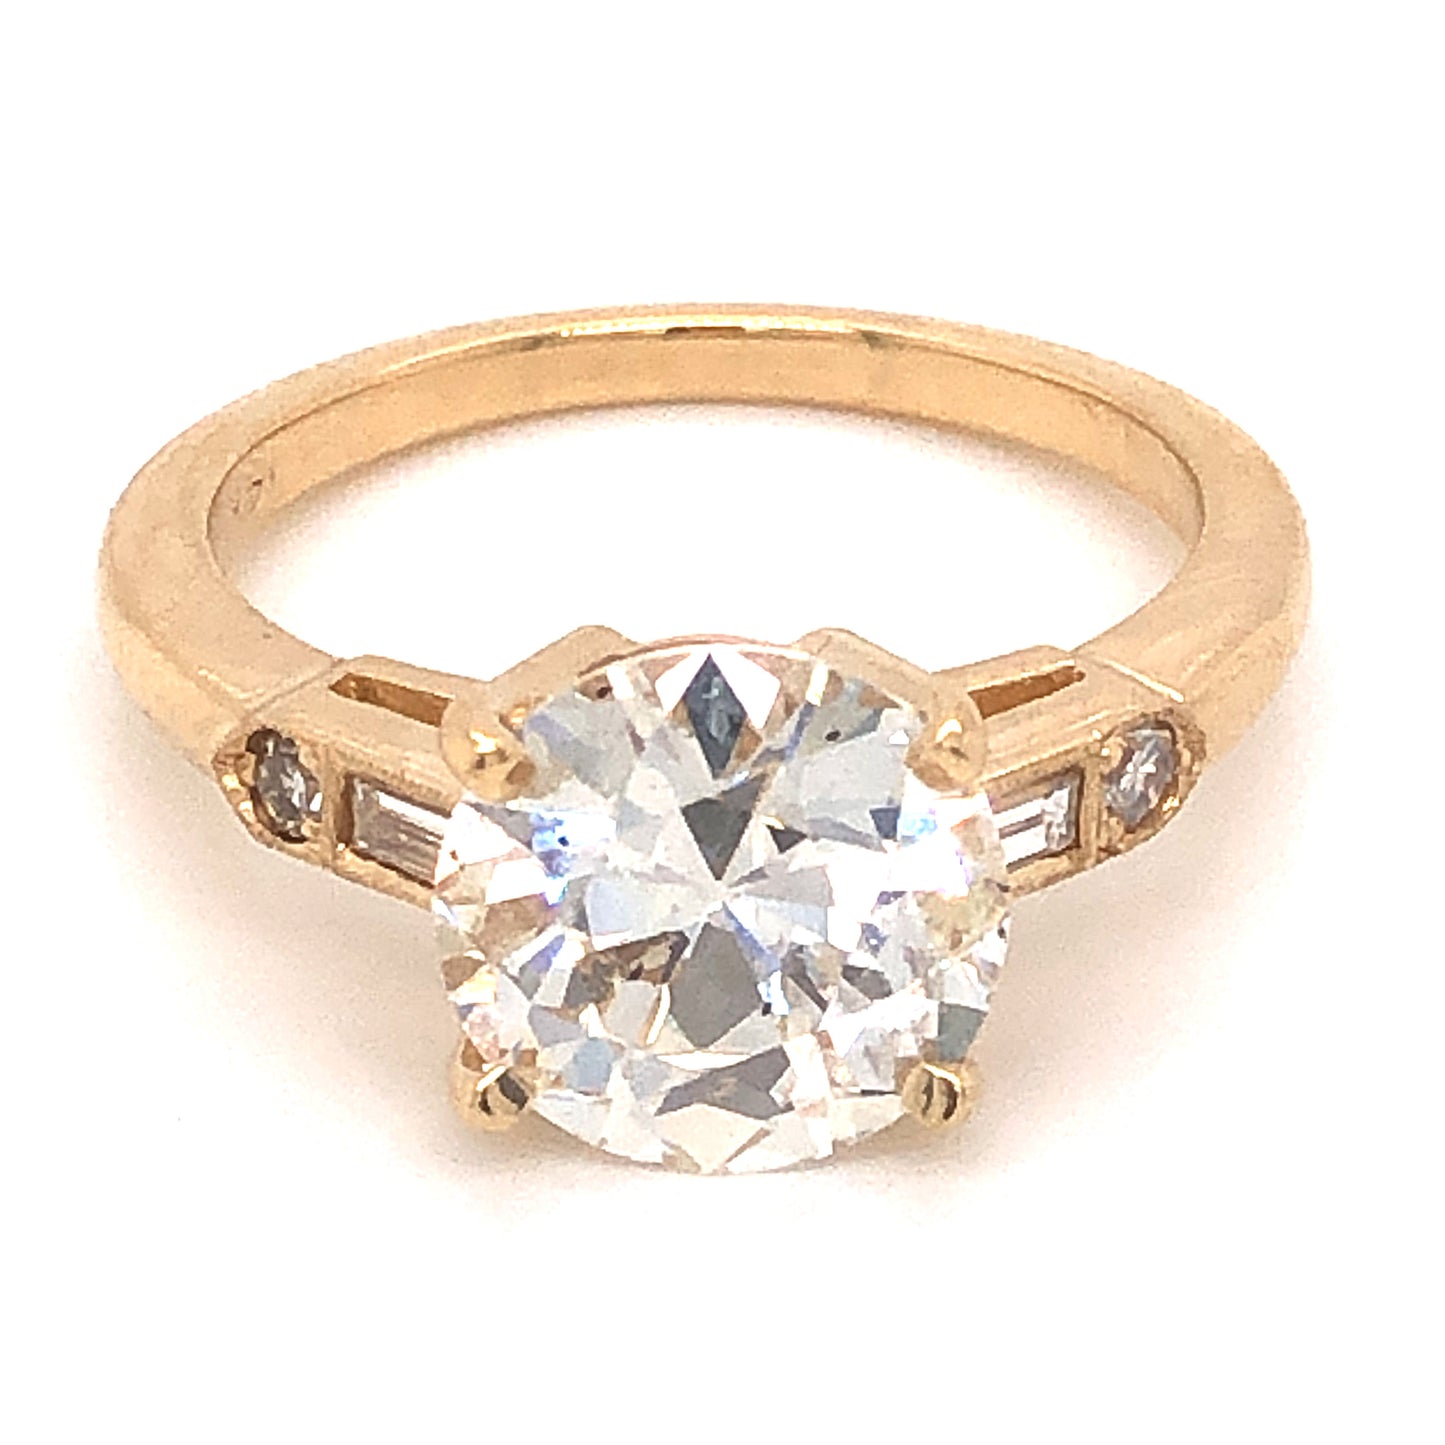 2.50 Old European Cut GIA Diamond Engagement Ring in 14k